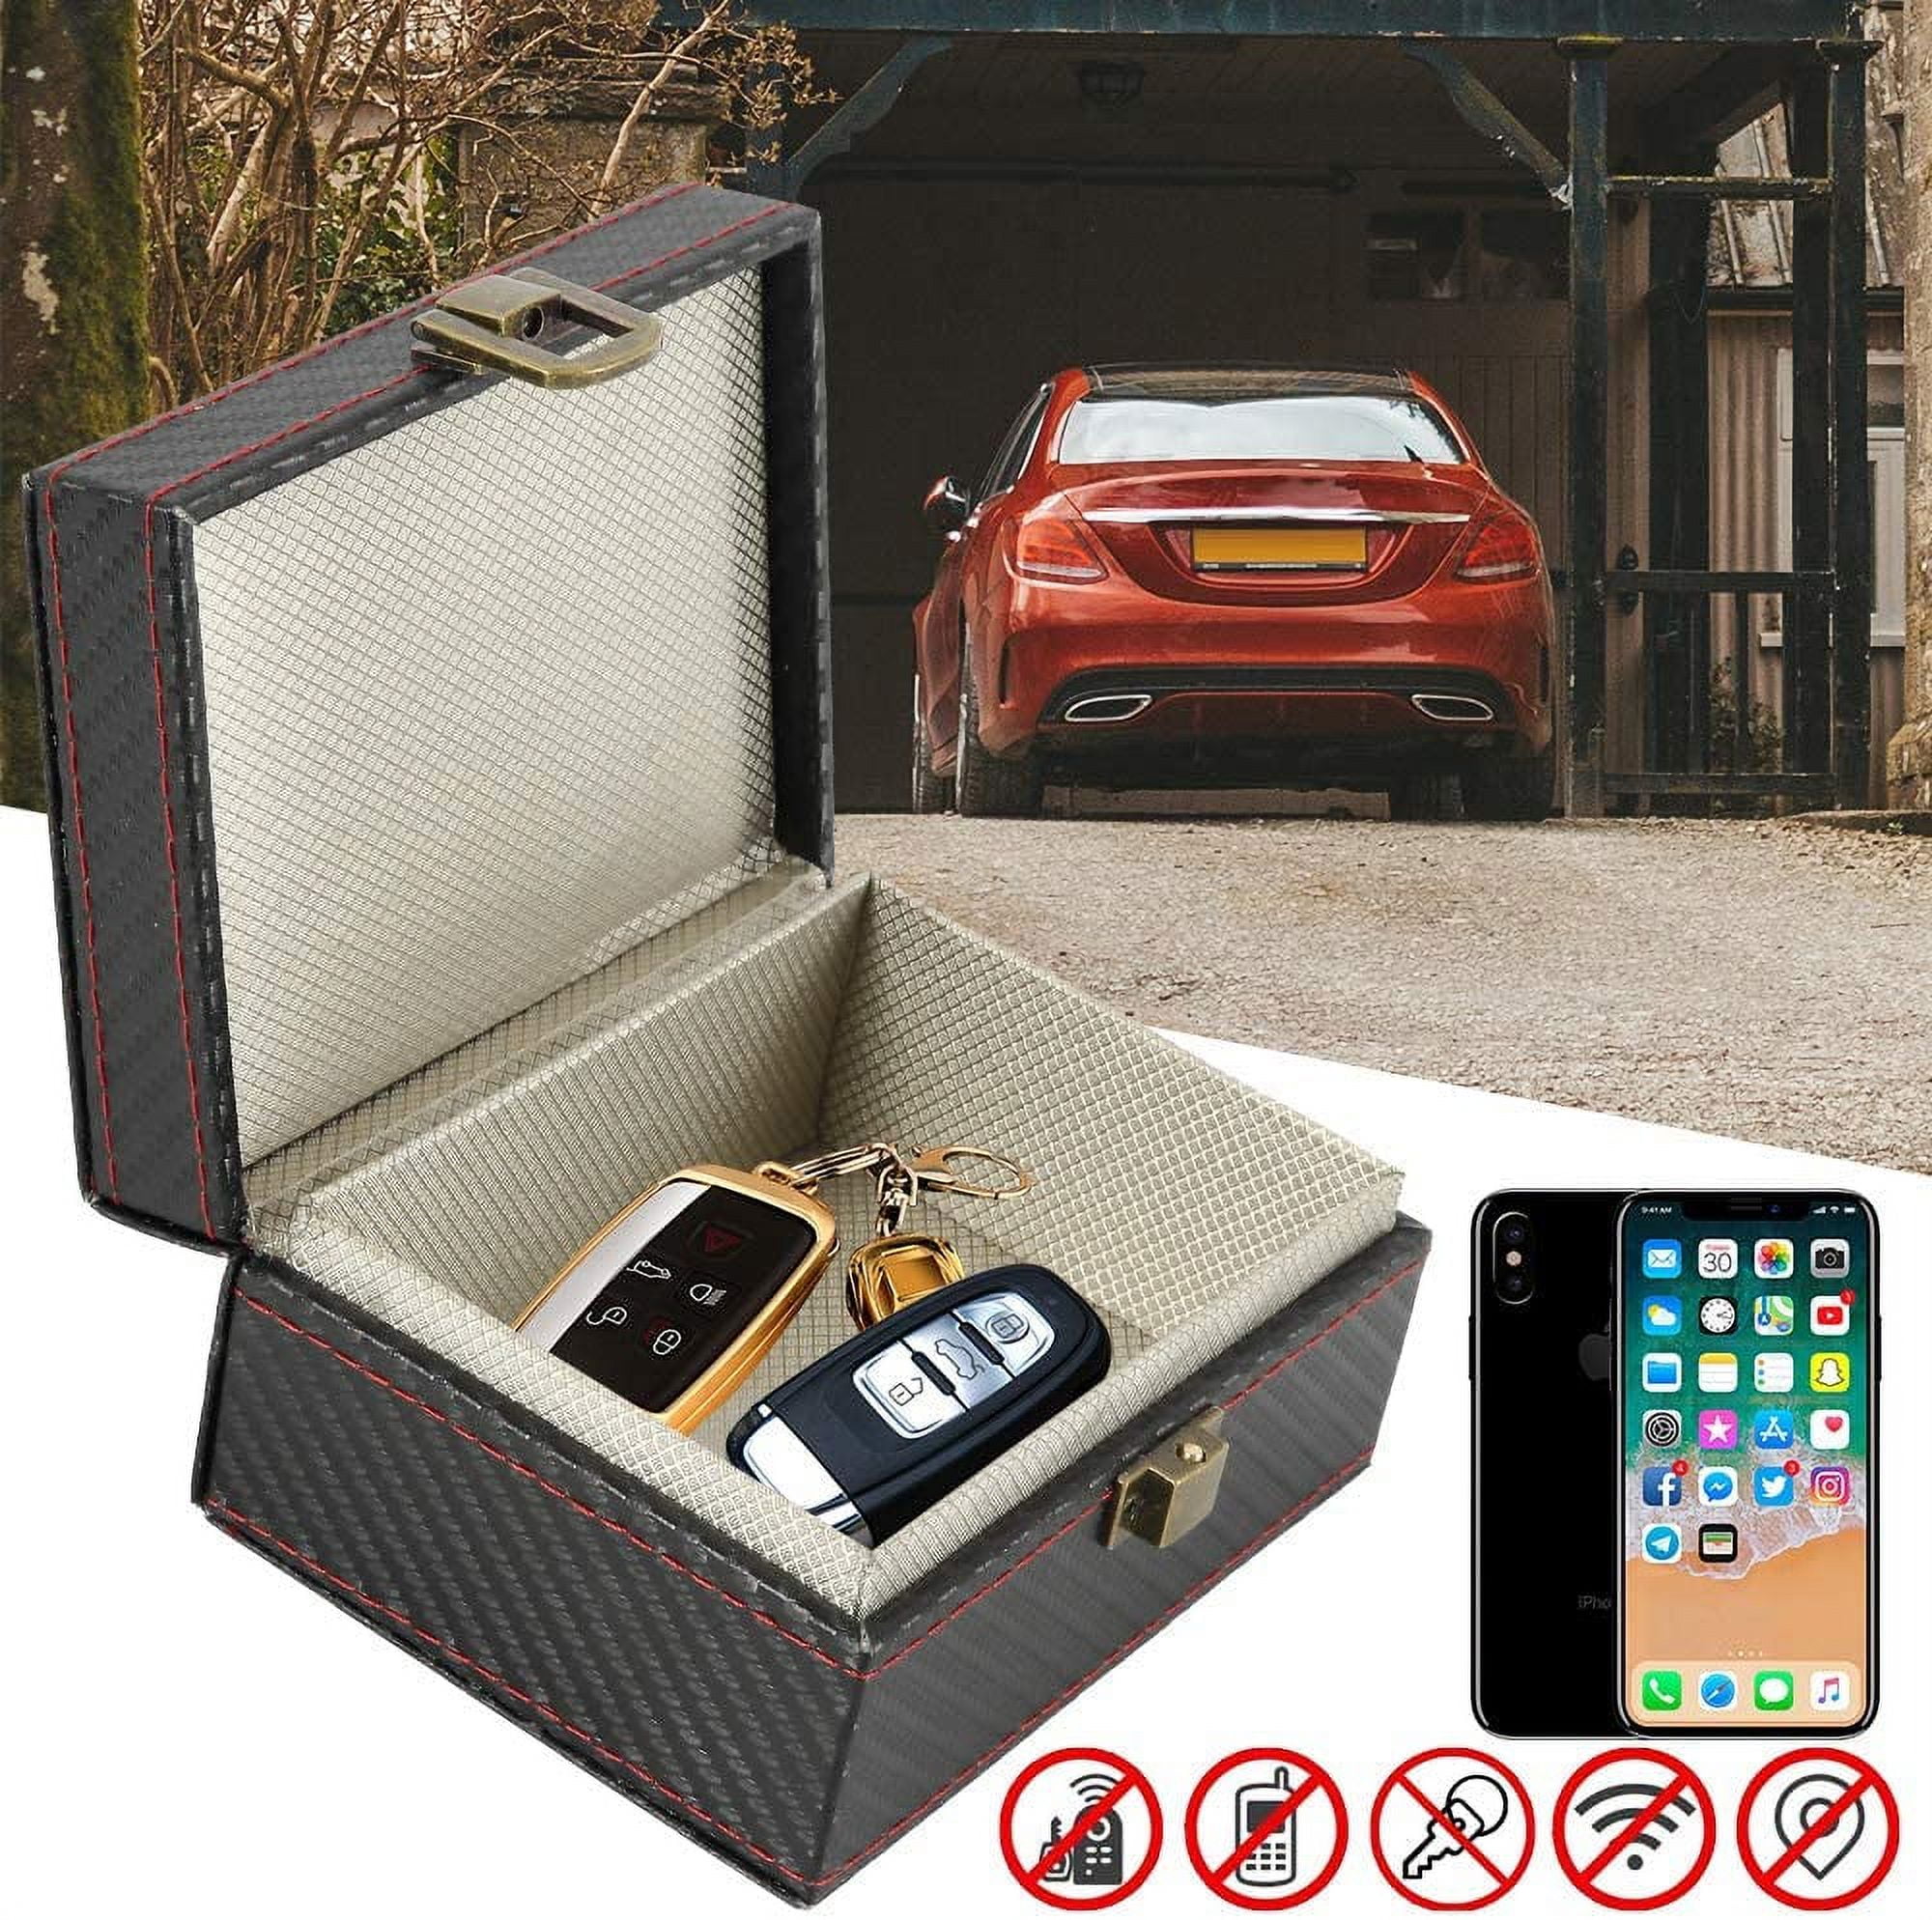 Hvxrjkn Faraday Box,Car Key Fob Protector,Leather Signal Blocker